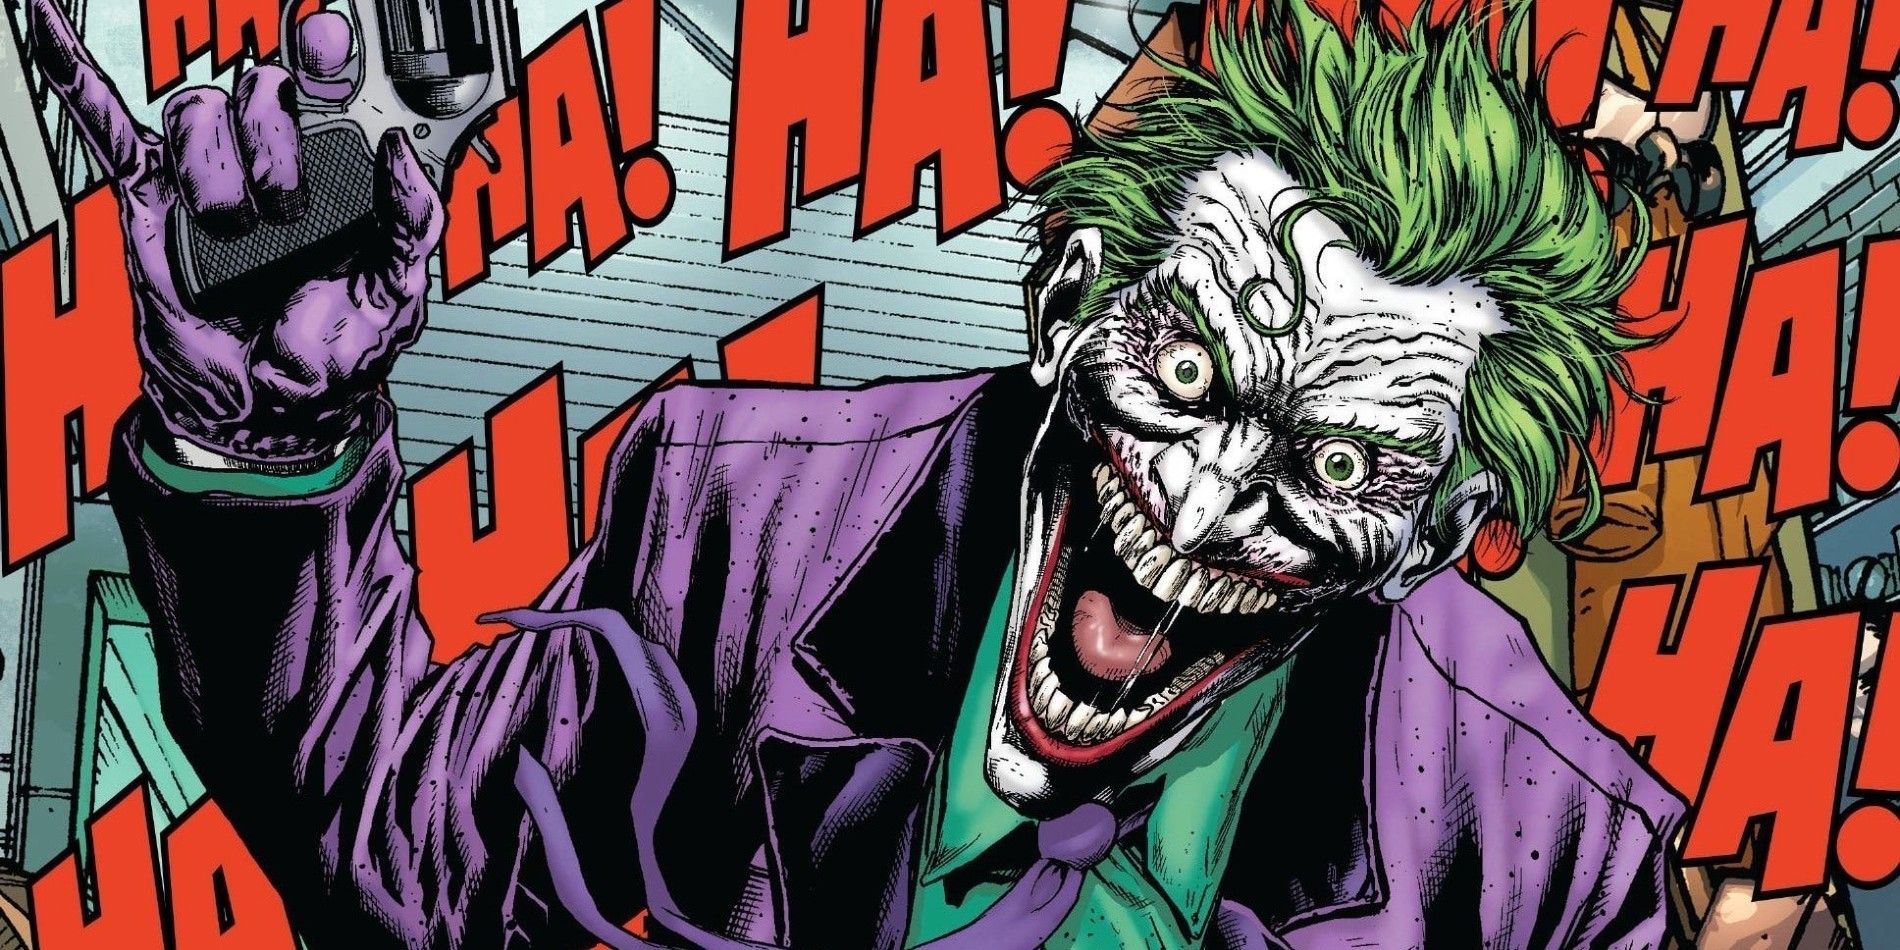 Joker laughing in the comics.